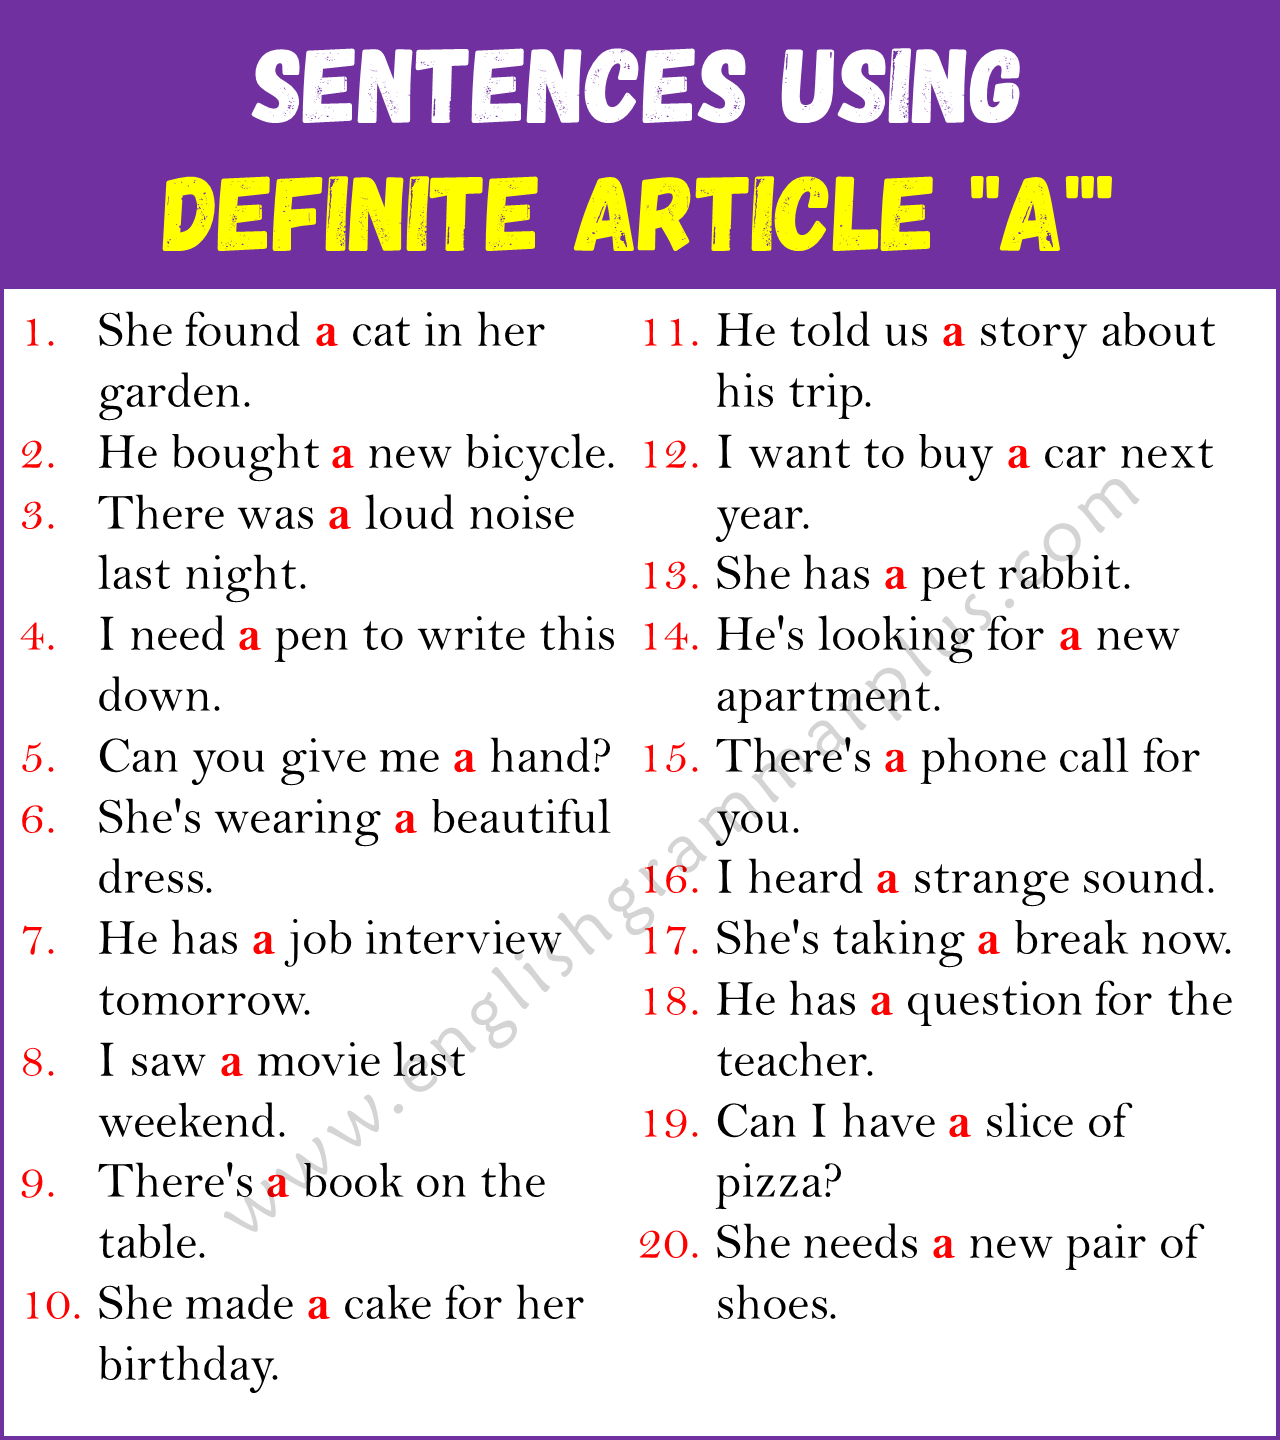 Sentences Using DEFINITE ARTICLE A